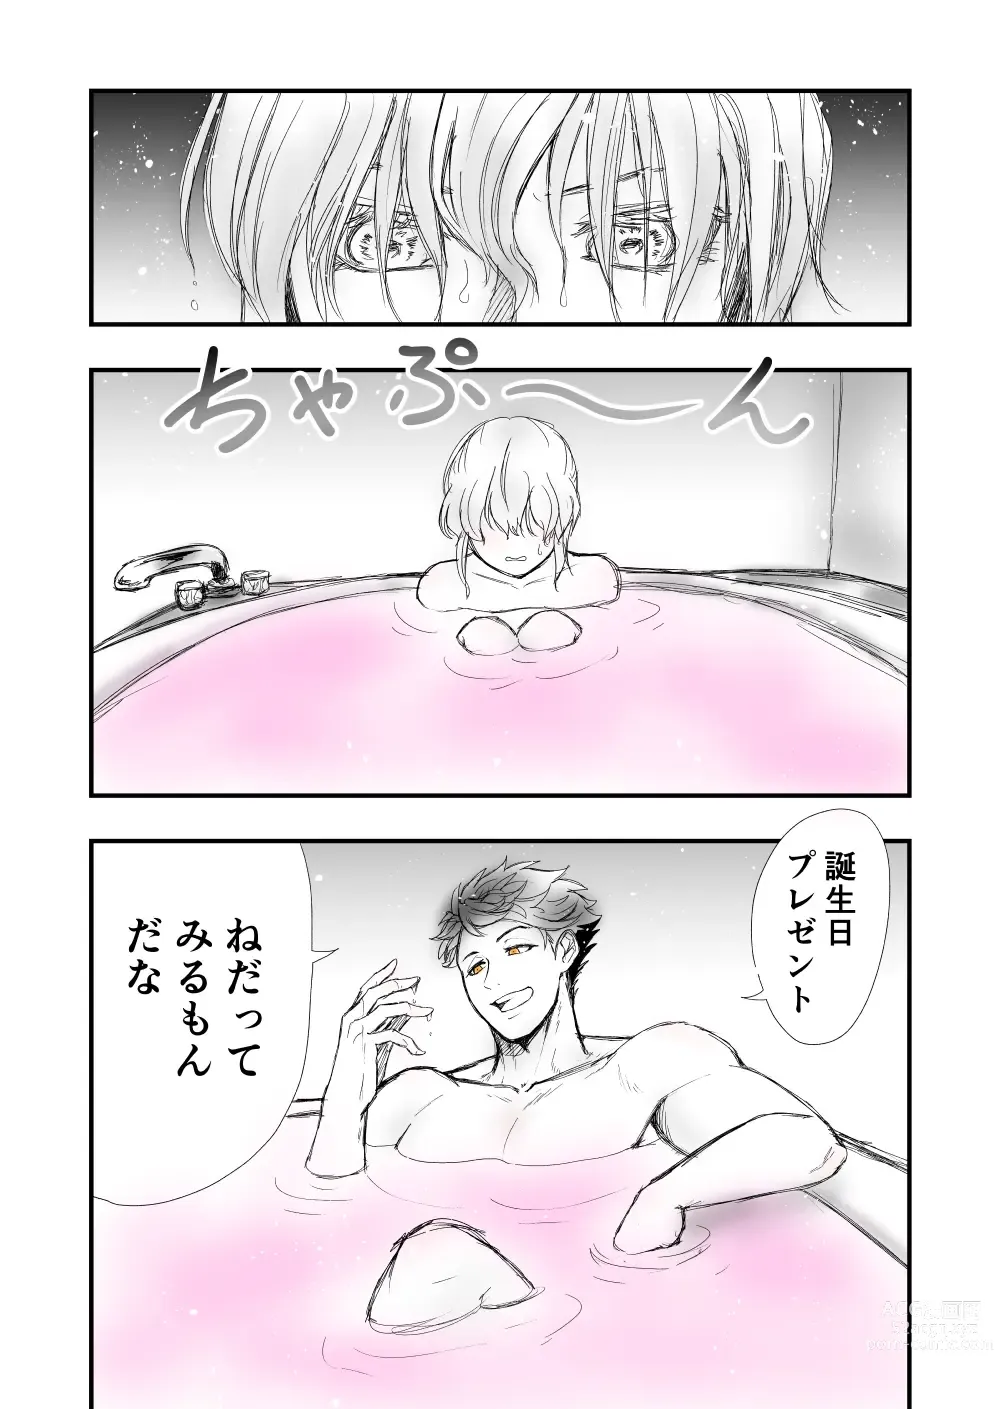 Page 6 of doujinshi 3